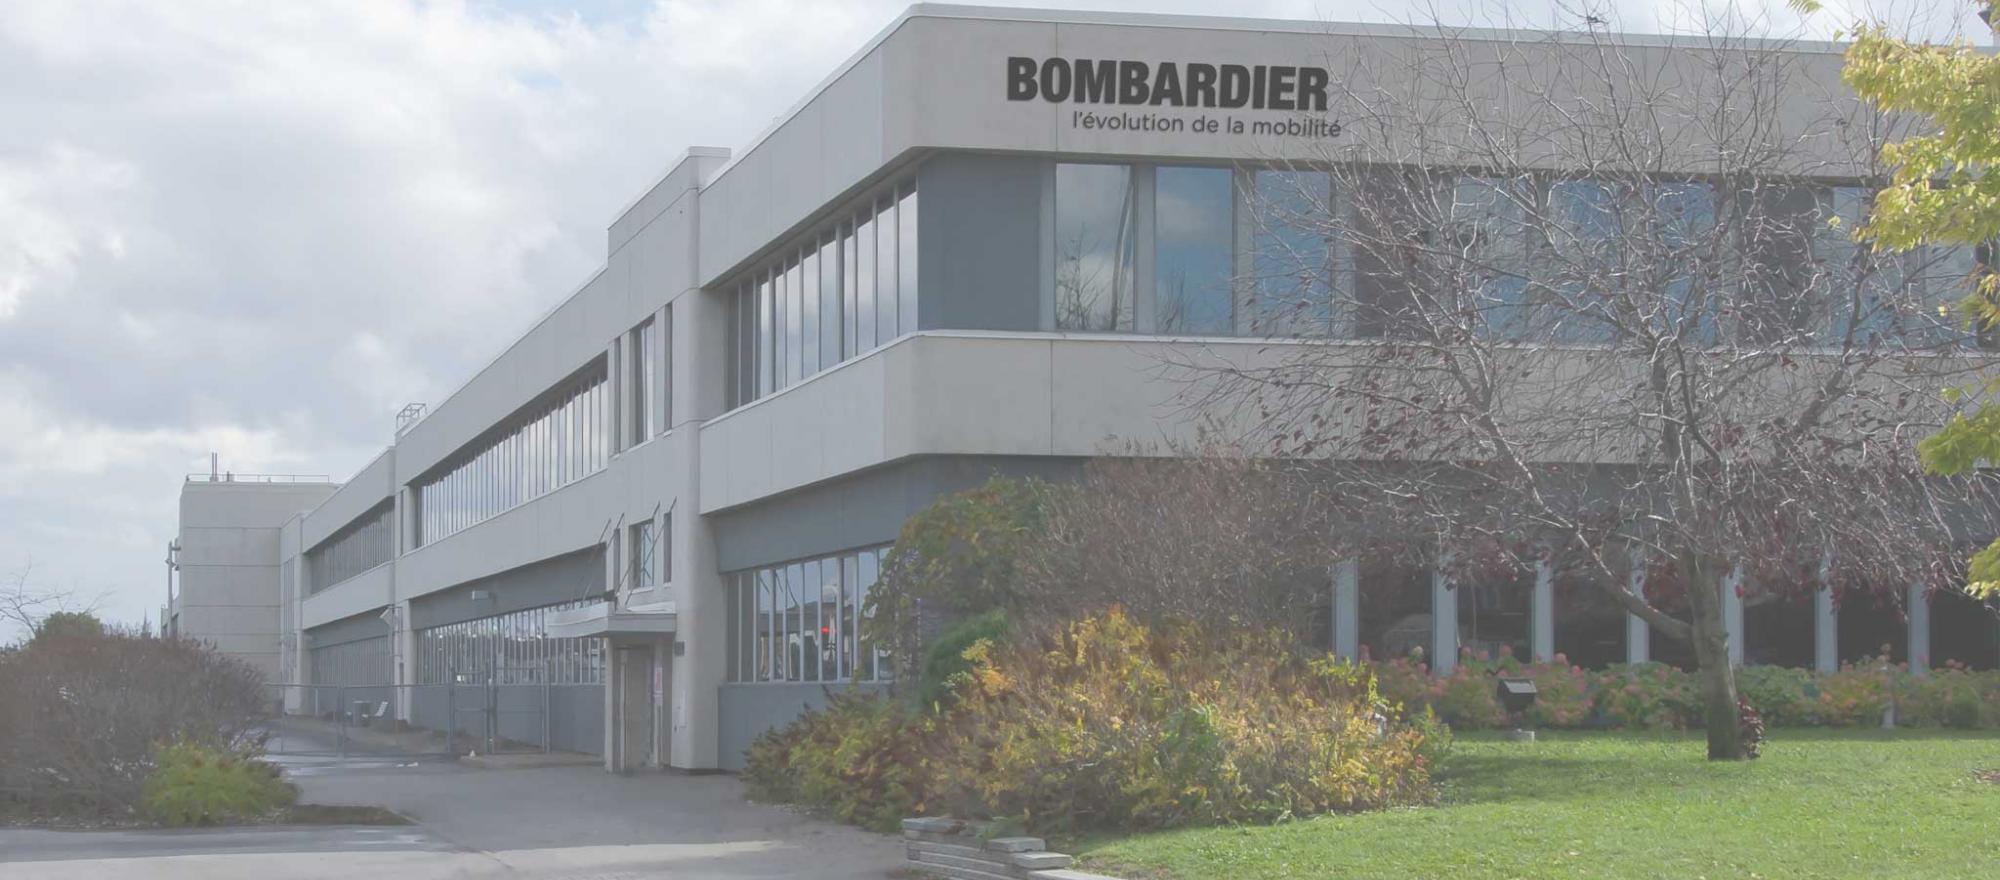 Bombardier building